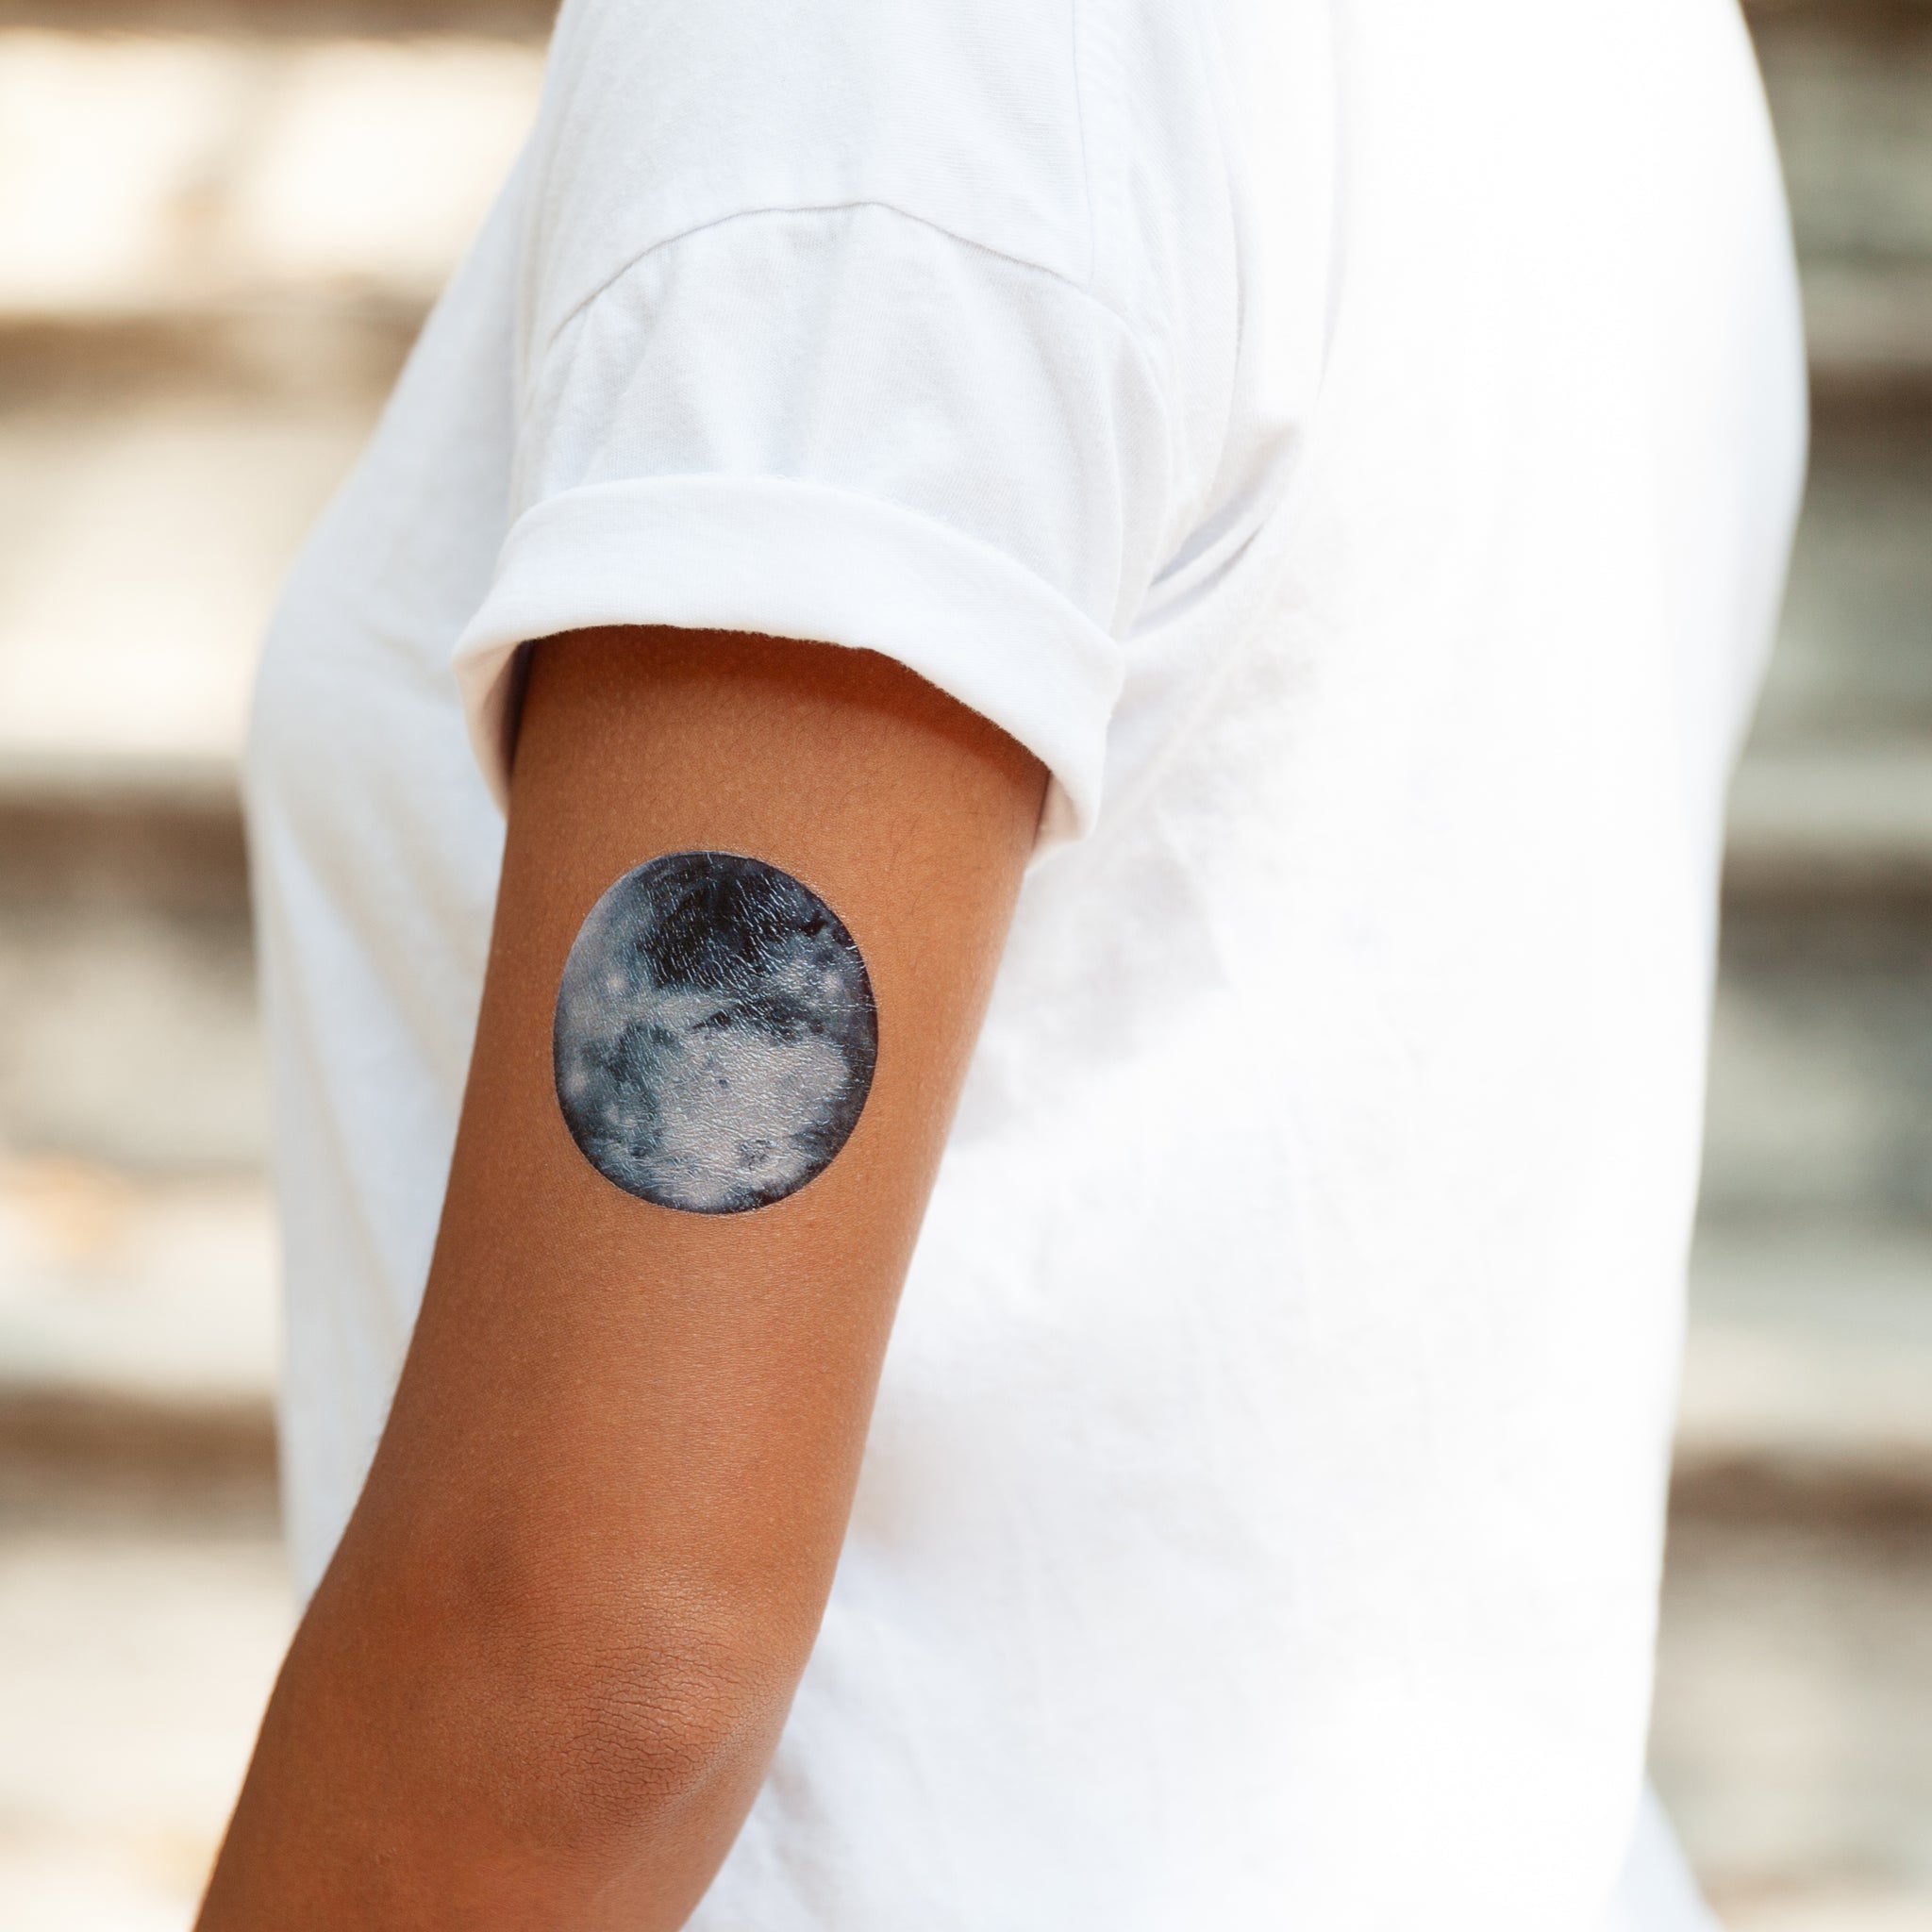 Minimalist moon phases tattoo on the inner forearm